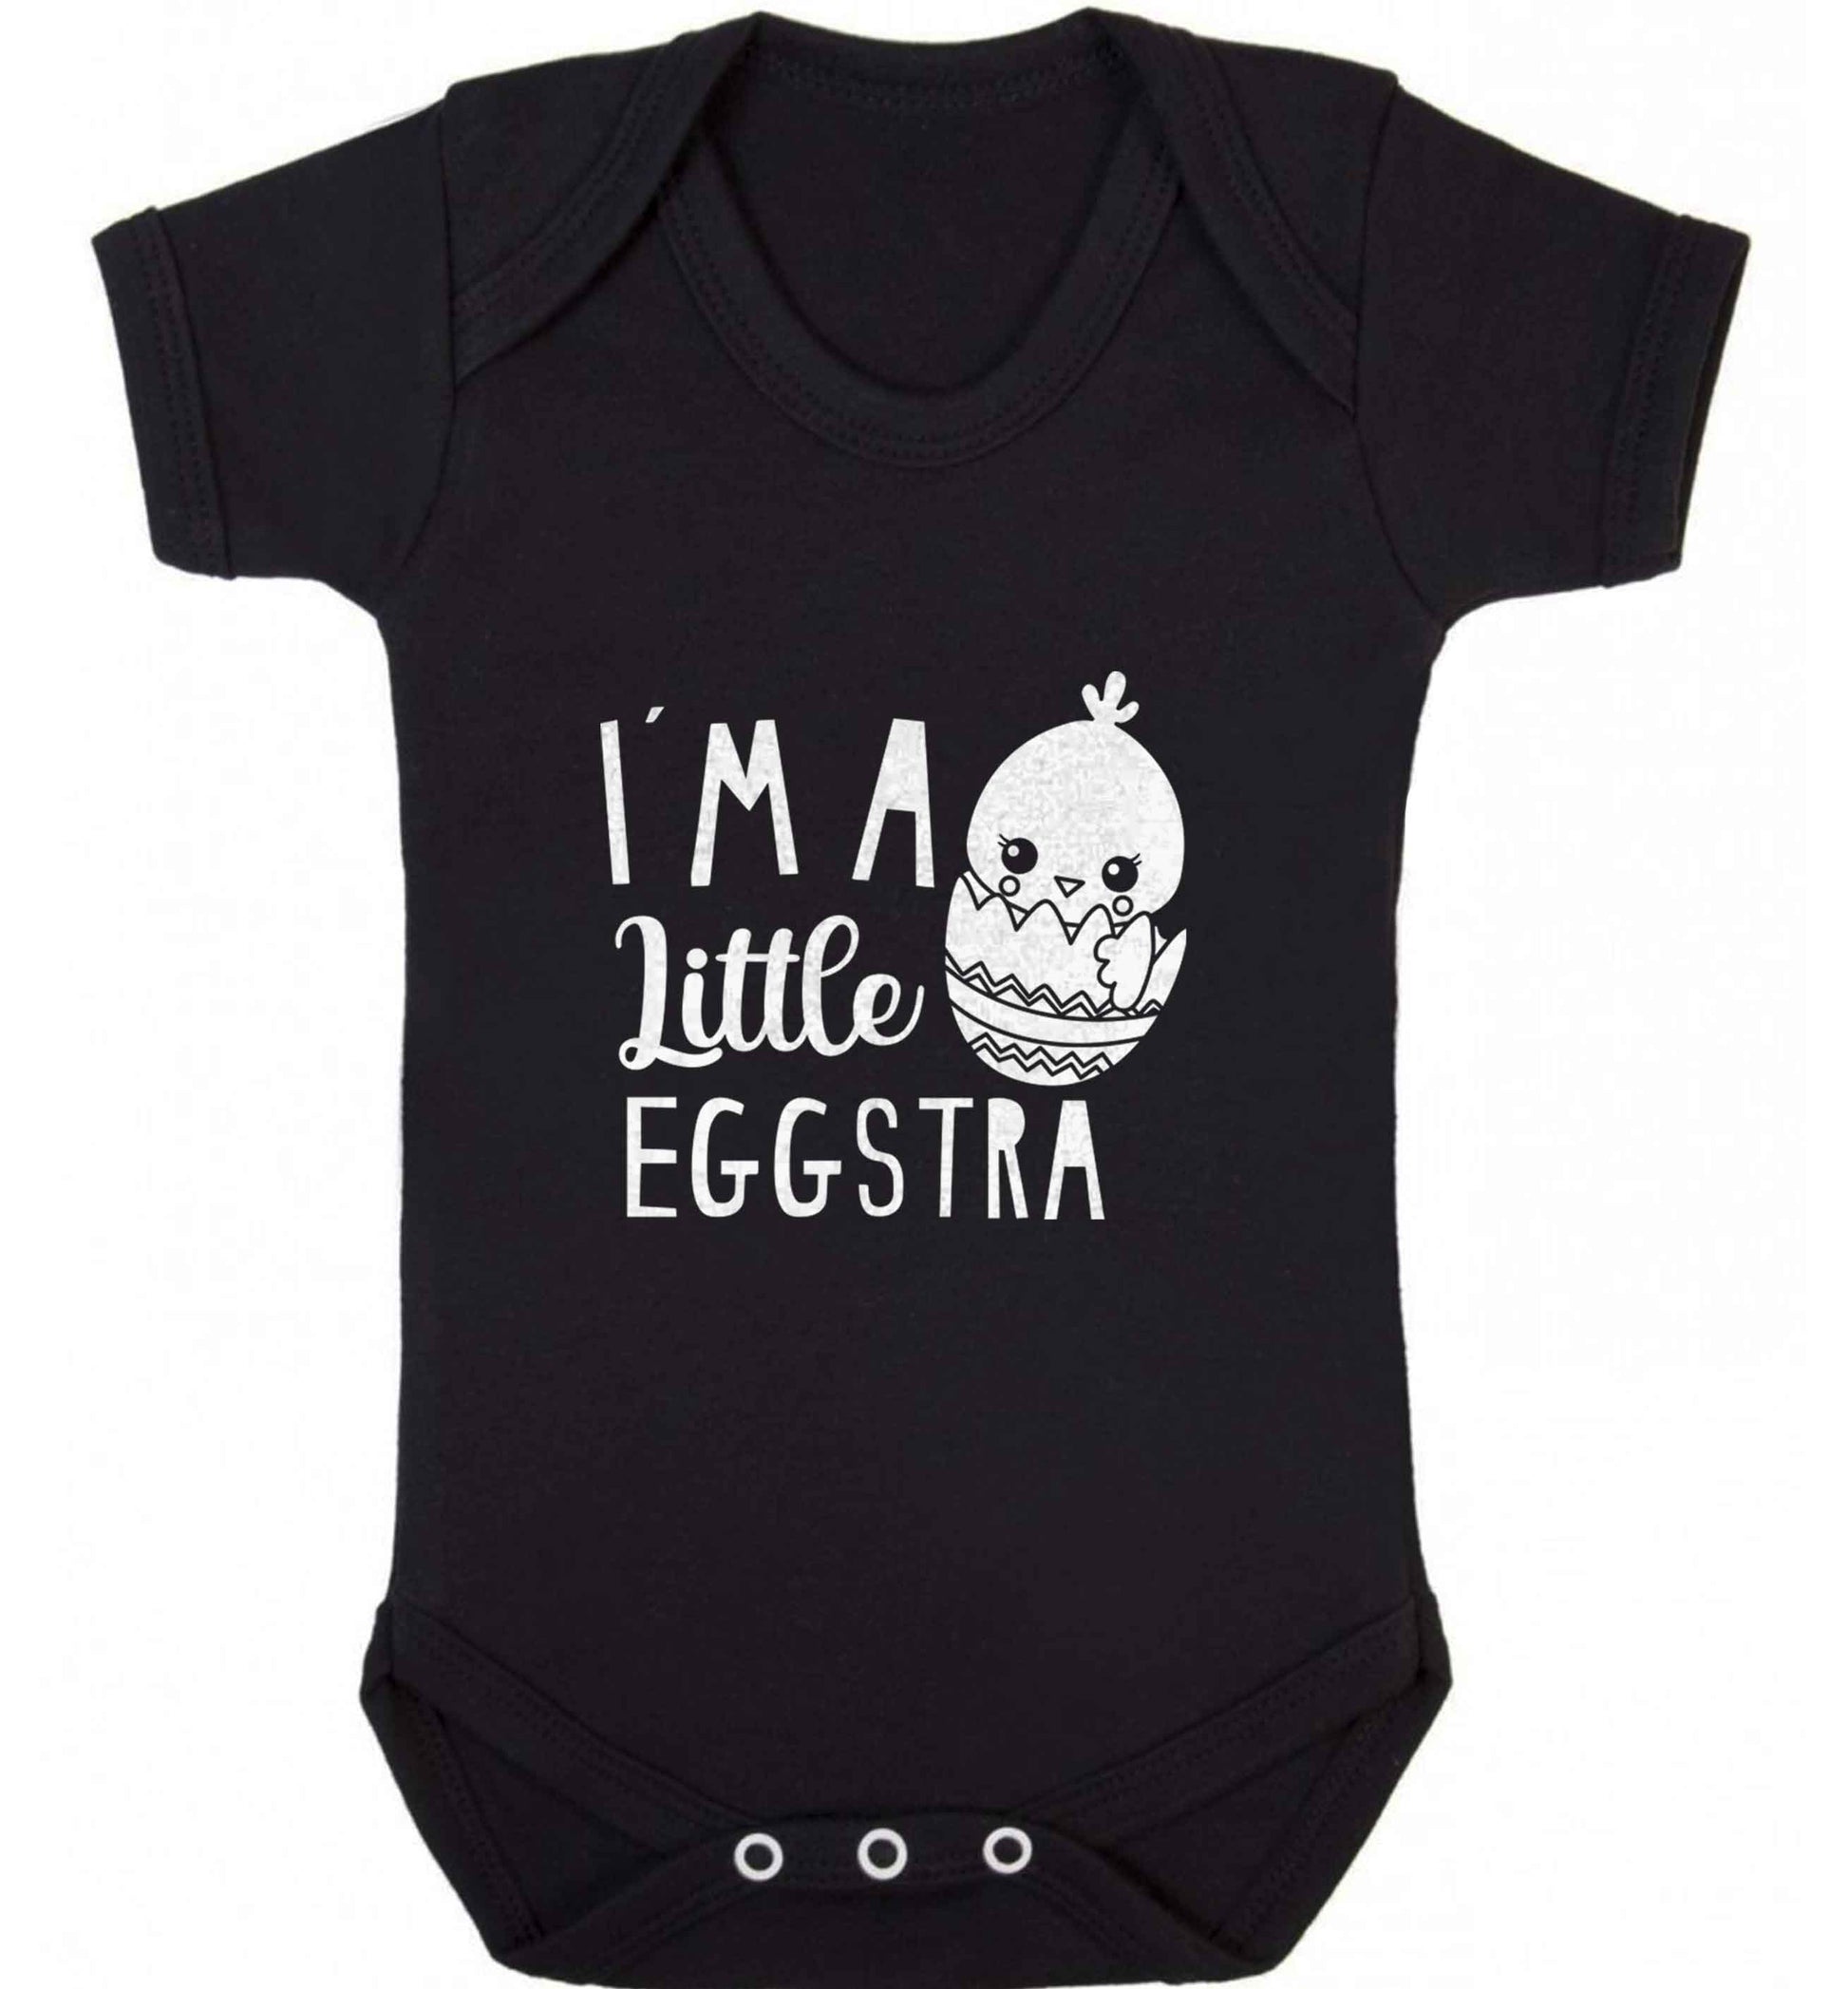 I'm a little eggstra baby vest black 18-24 months